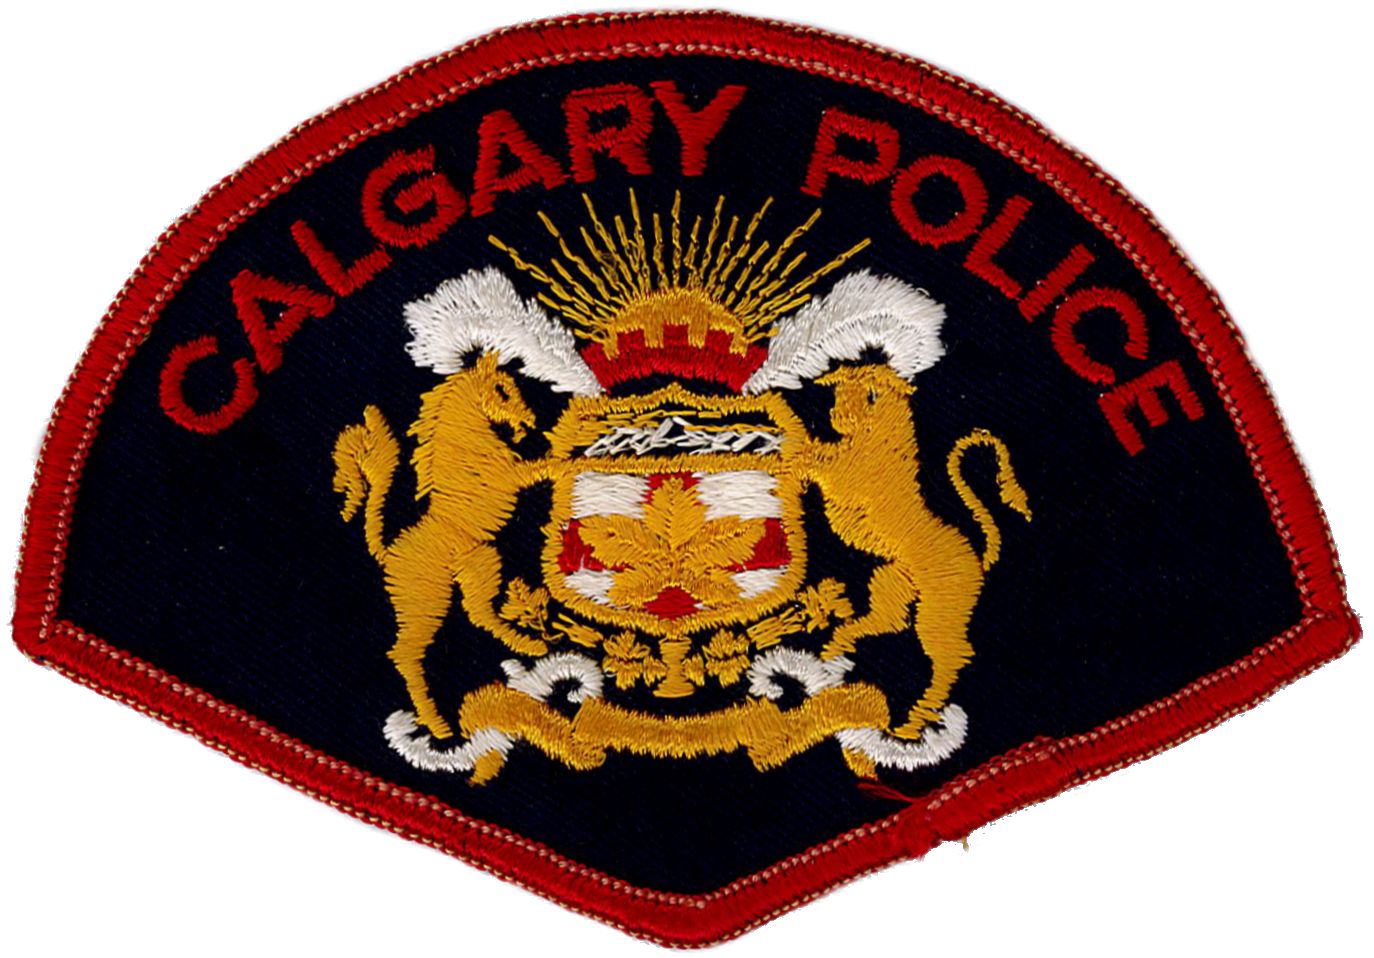 Calgary Police